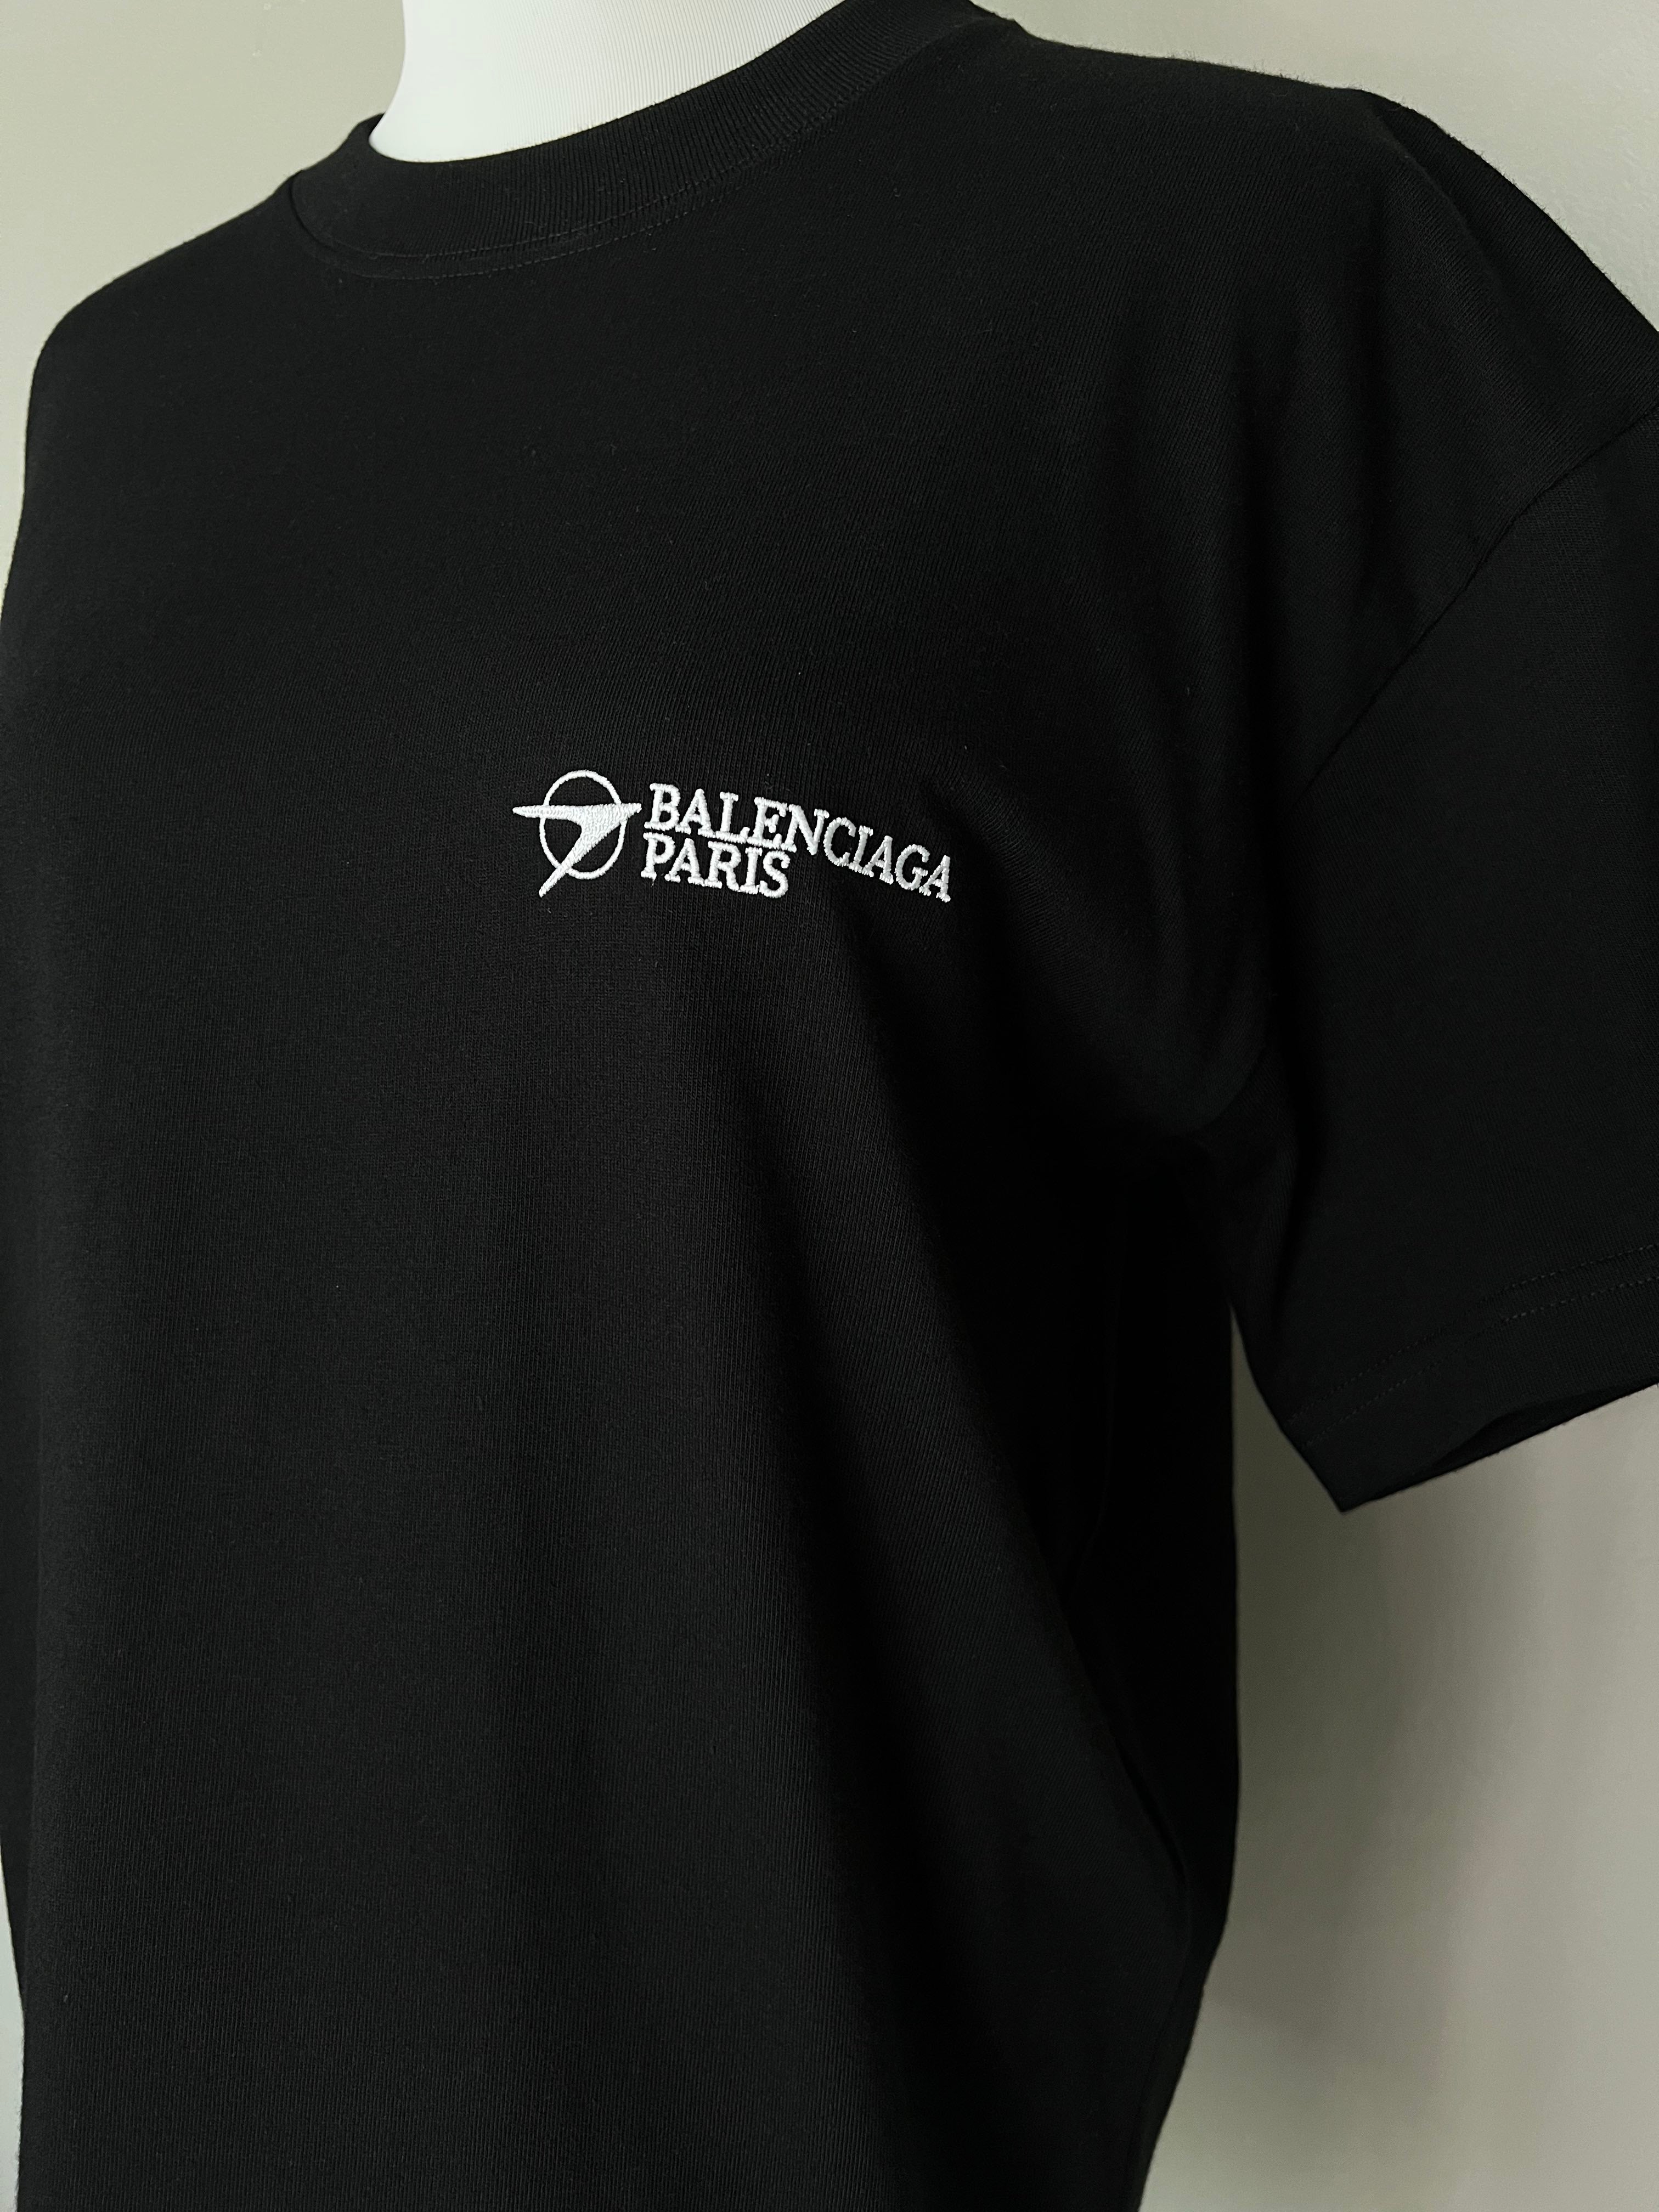 Black plain t-shirt with logo across back - BALENCIAGA